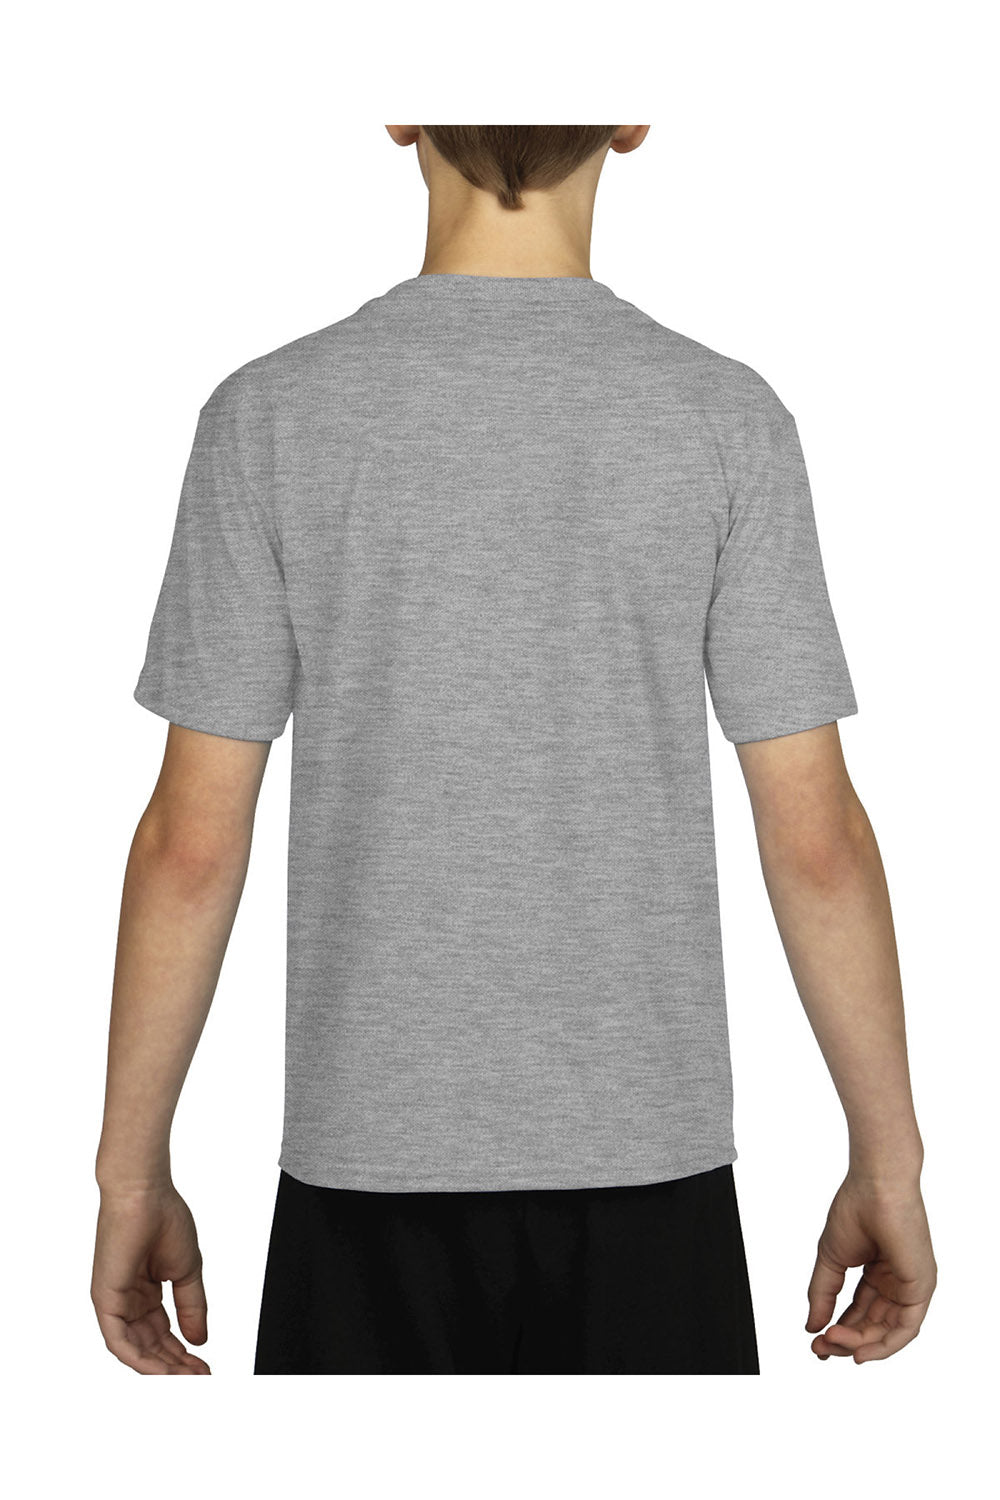 Gildan 42000B/G420B Youth Performance Jersey Moisture Wicking Short Sleeve Crewneck T-Shirt Sport Grey Back